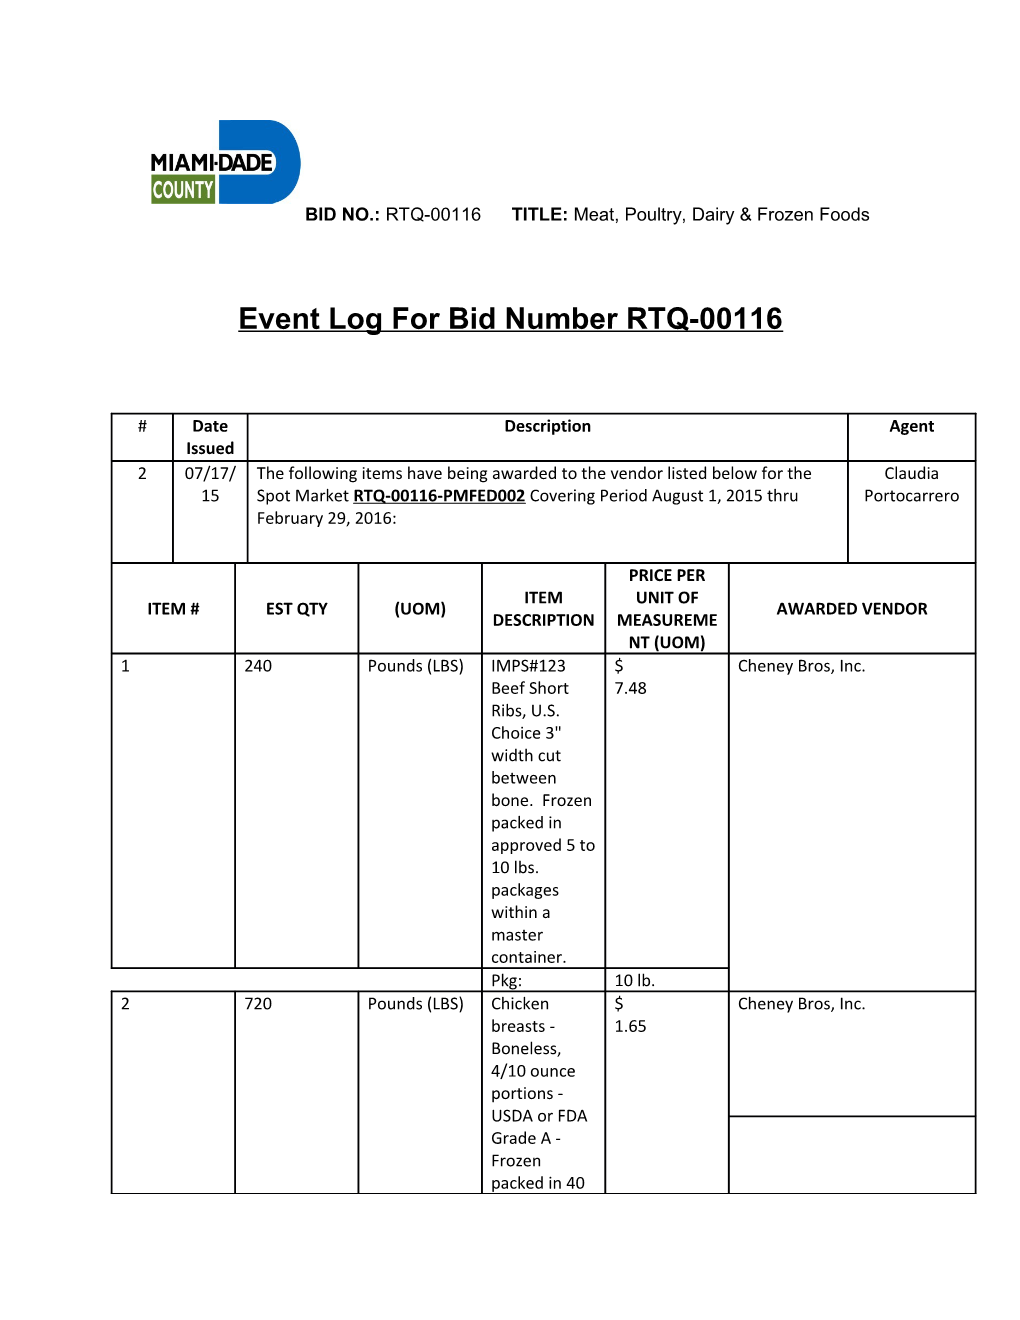 Event Log for Bid Number RTQ-00116